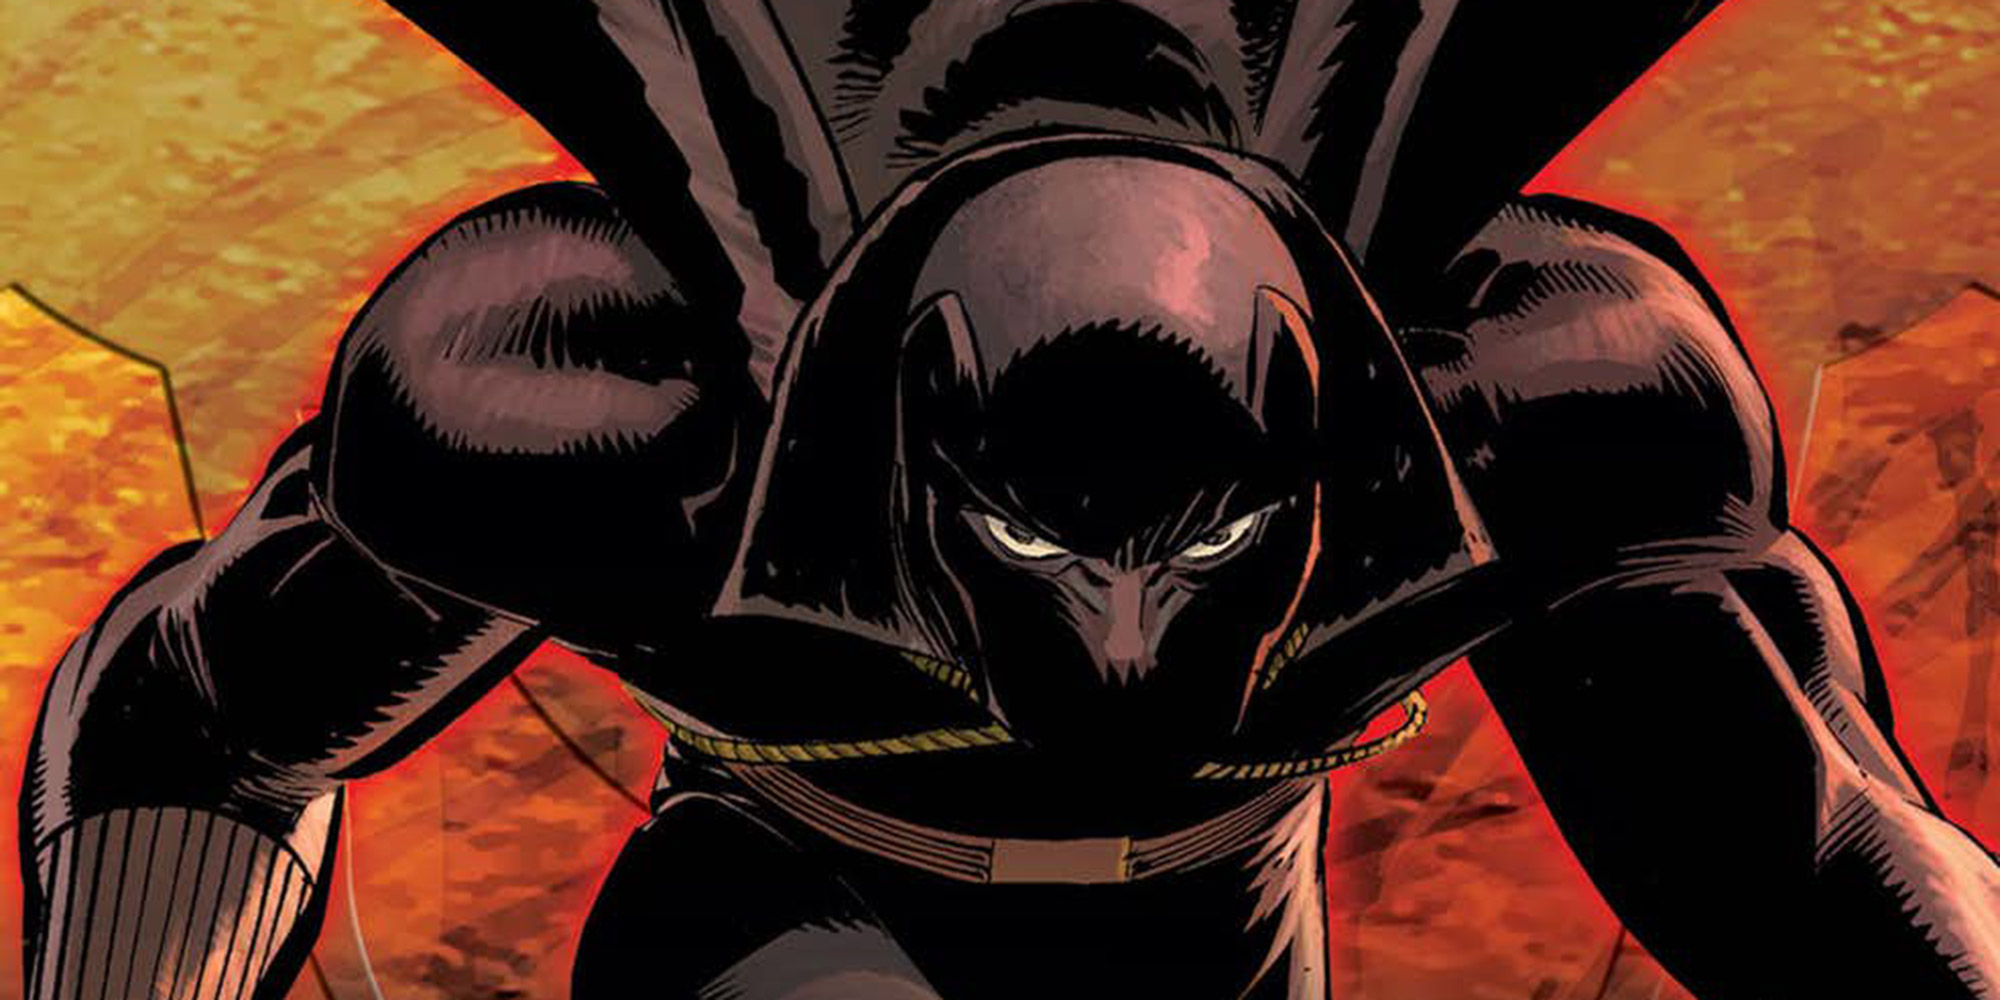  (Re)Découvrir gratuitement Black Panther – Marvel Knights Animation